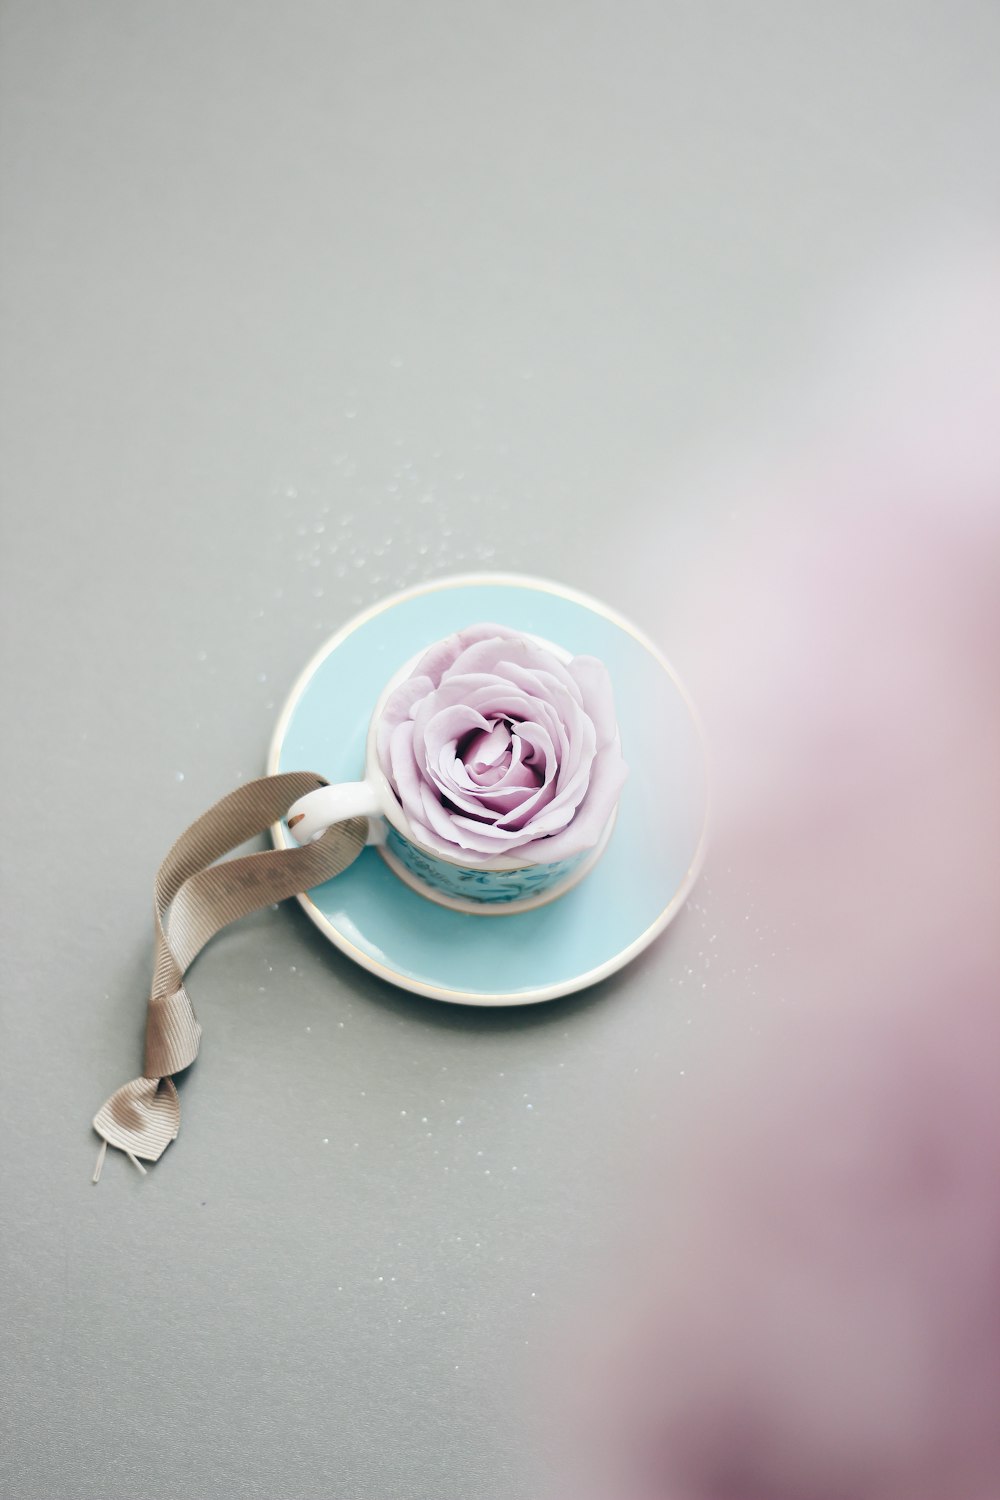 rosa rosa na xícara de chá de cerâmica branca